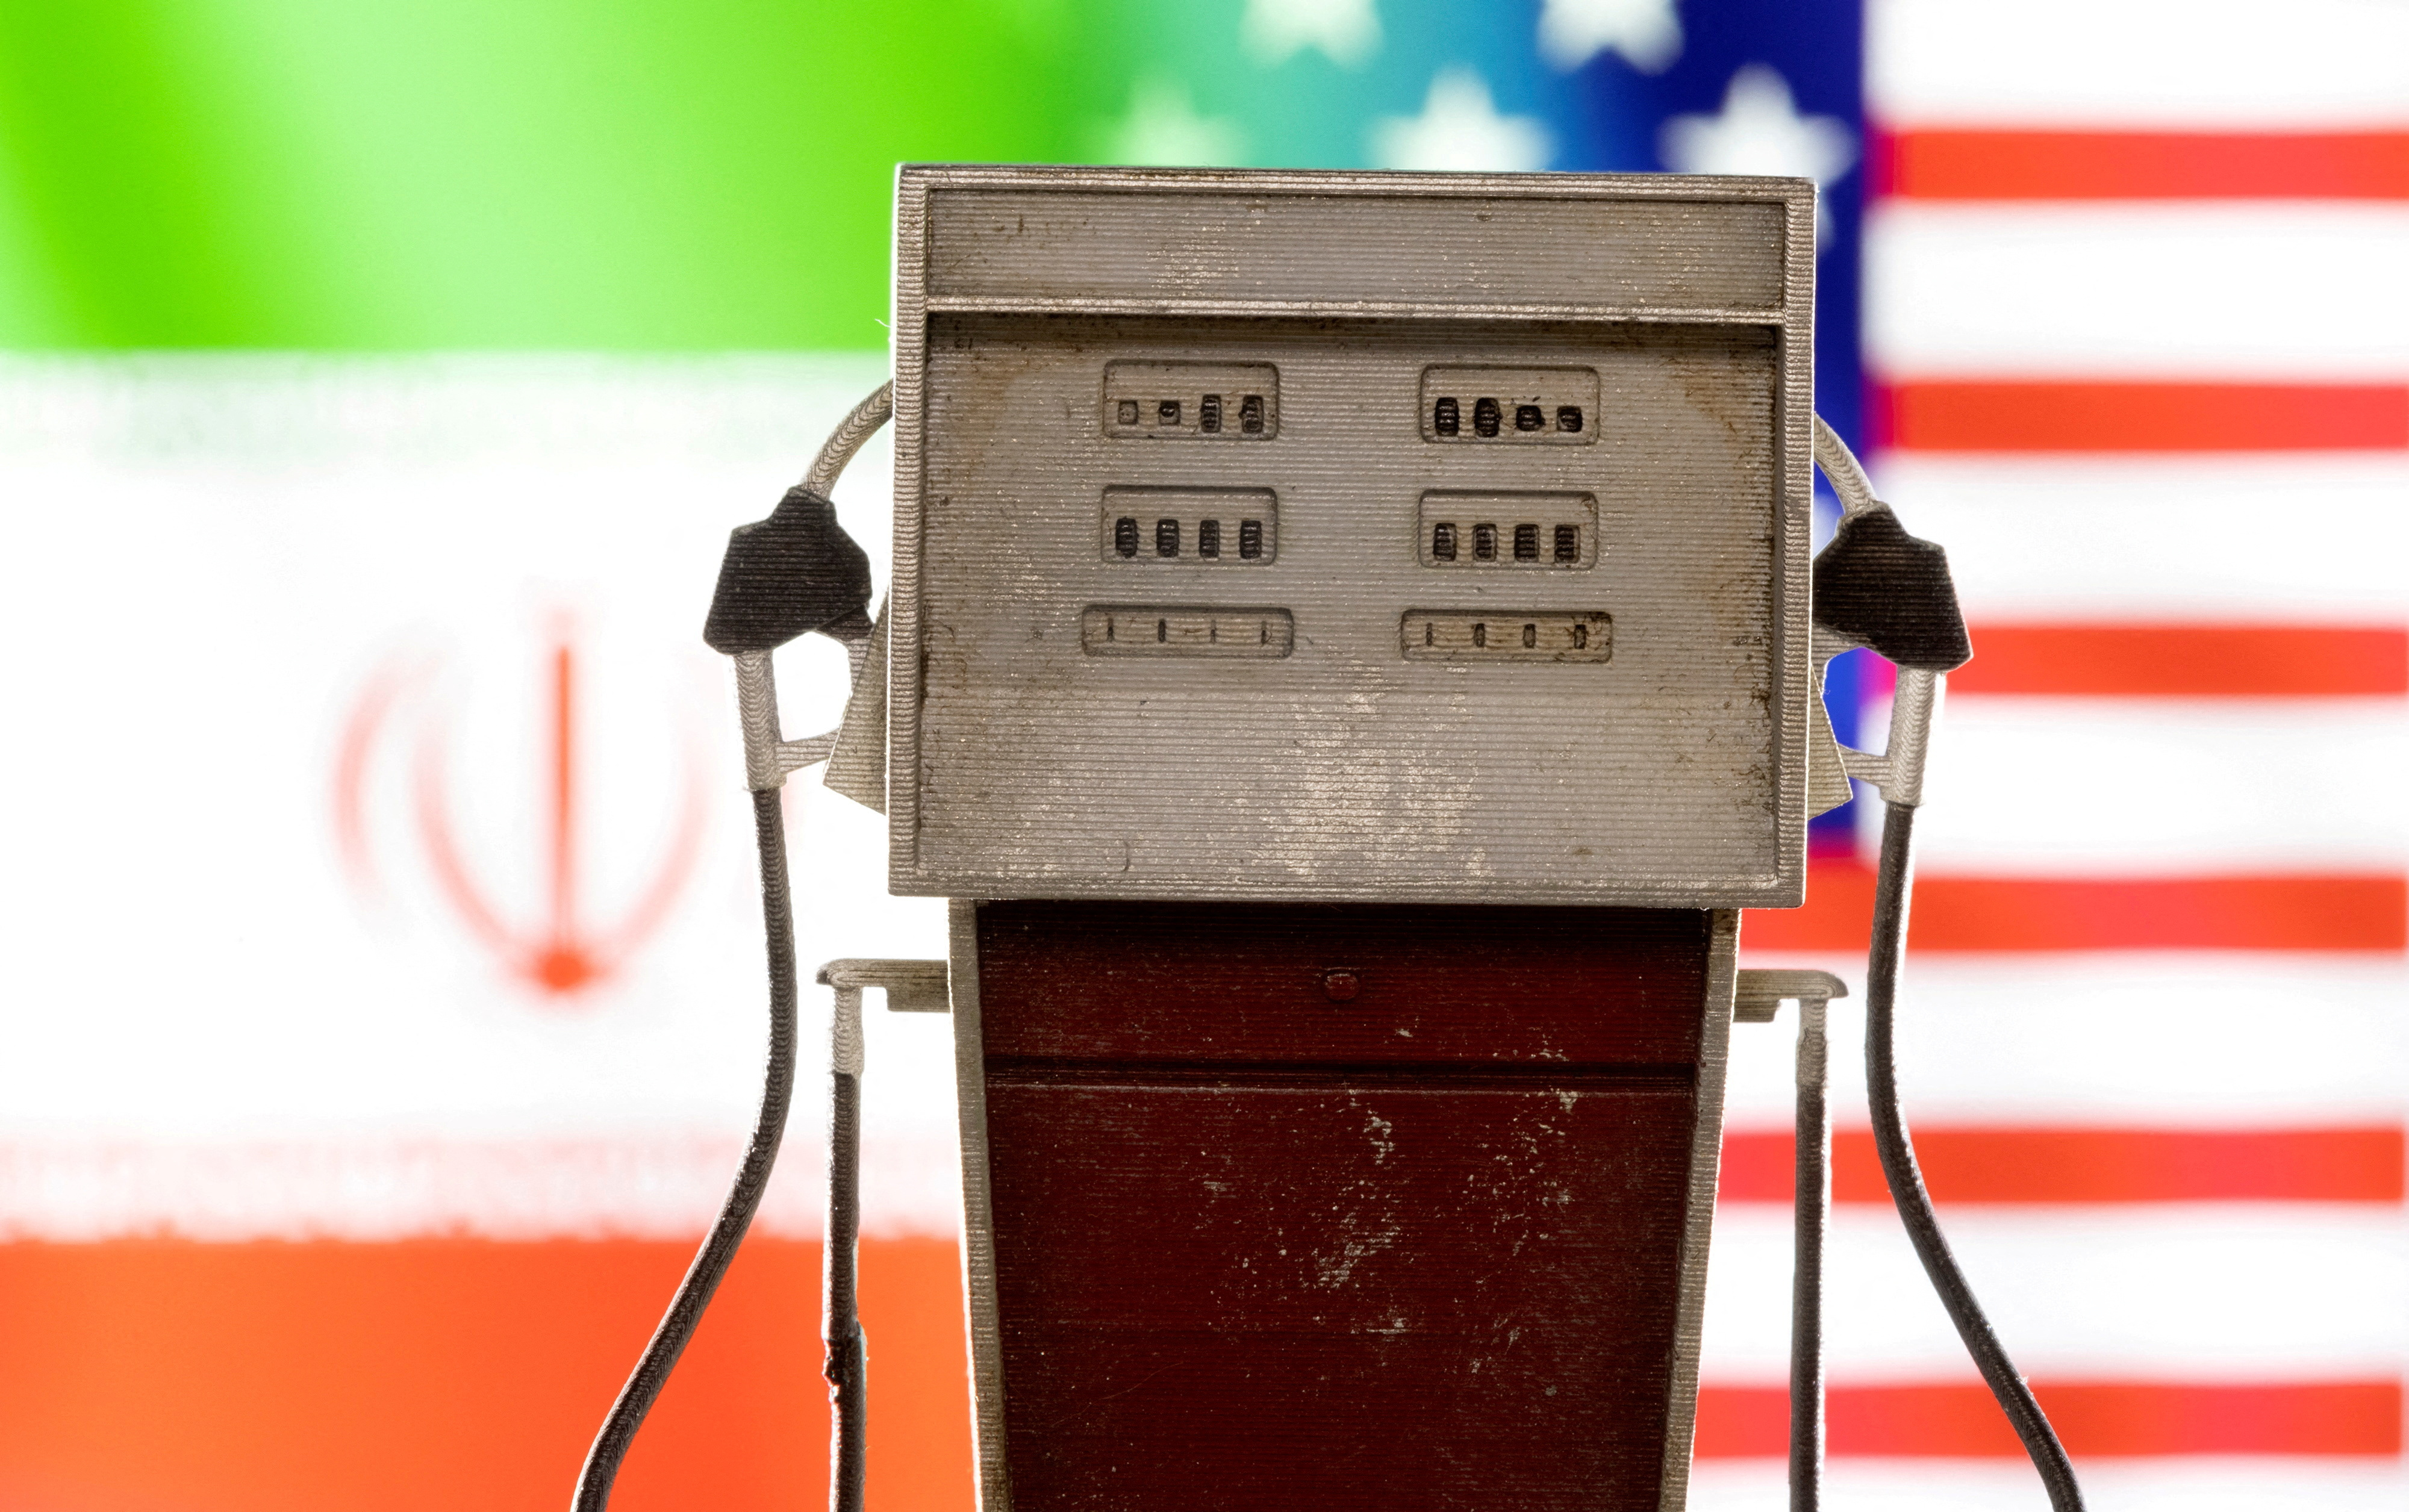 Illustration shows model of petrol pump, U.S. and Iran flag colors